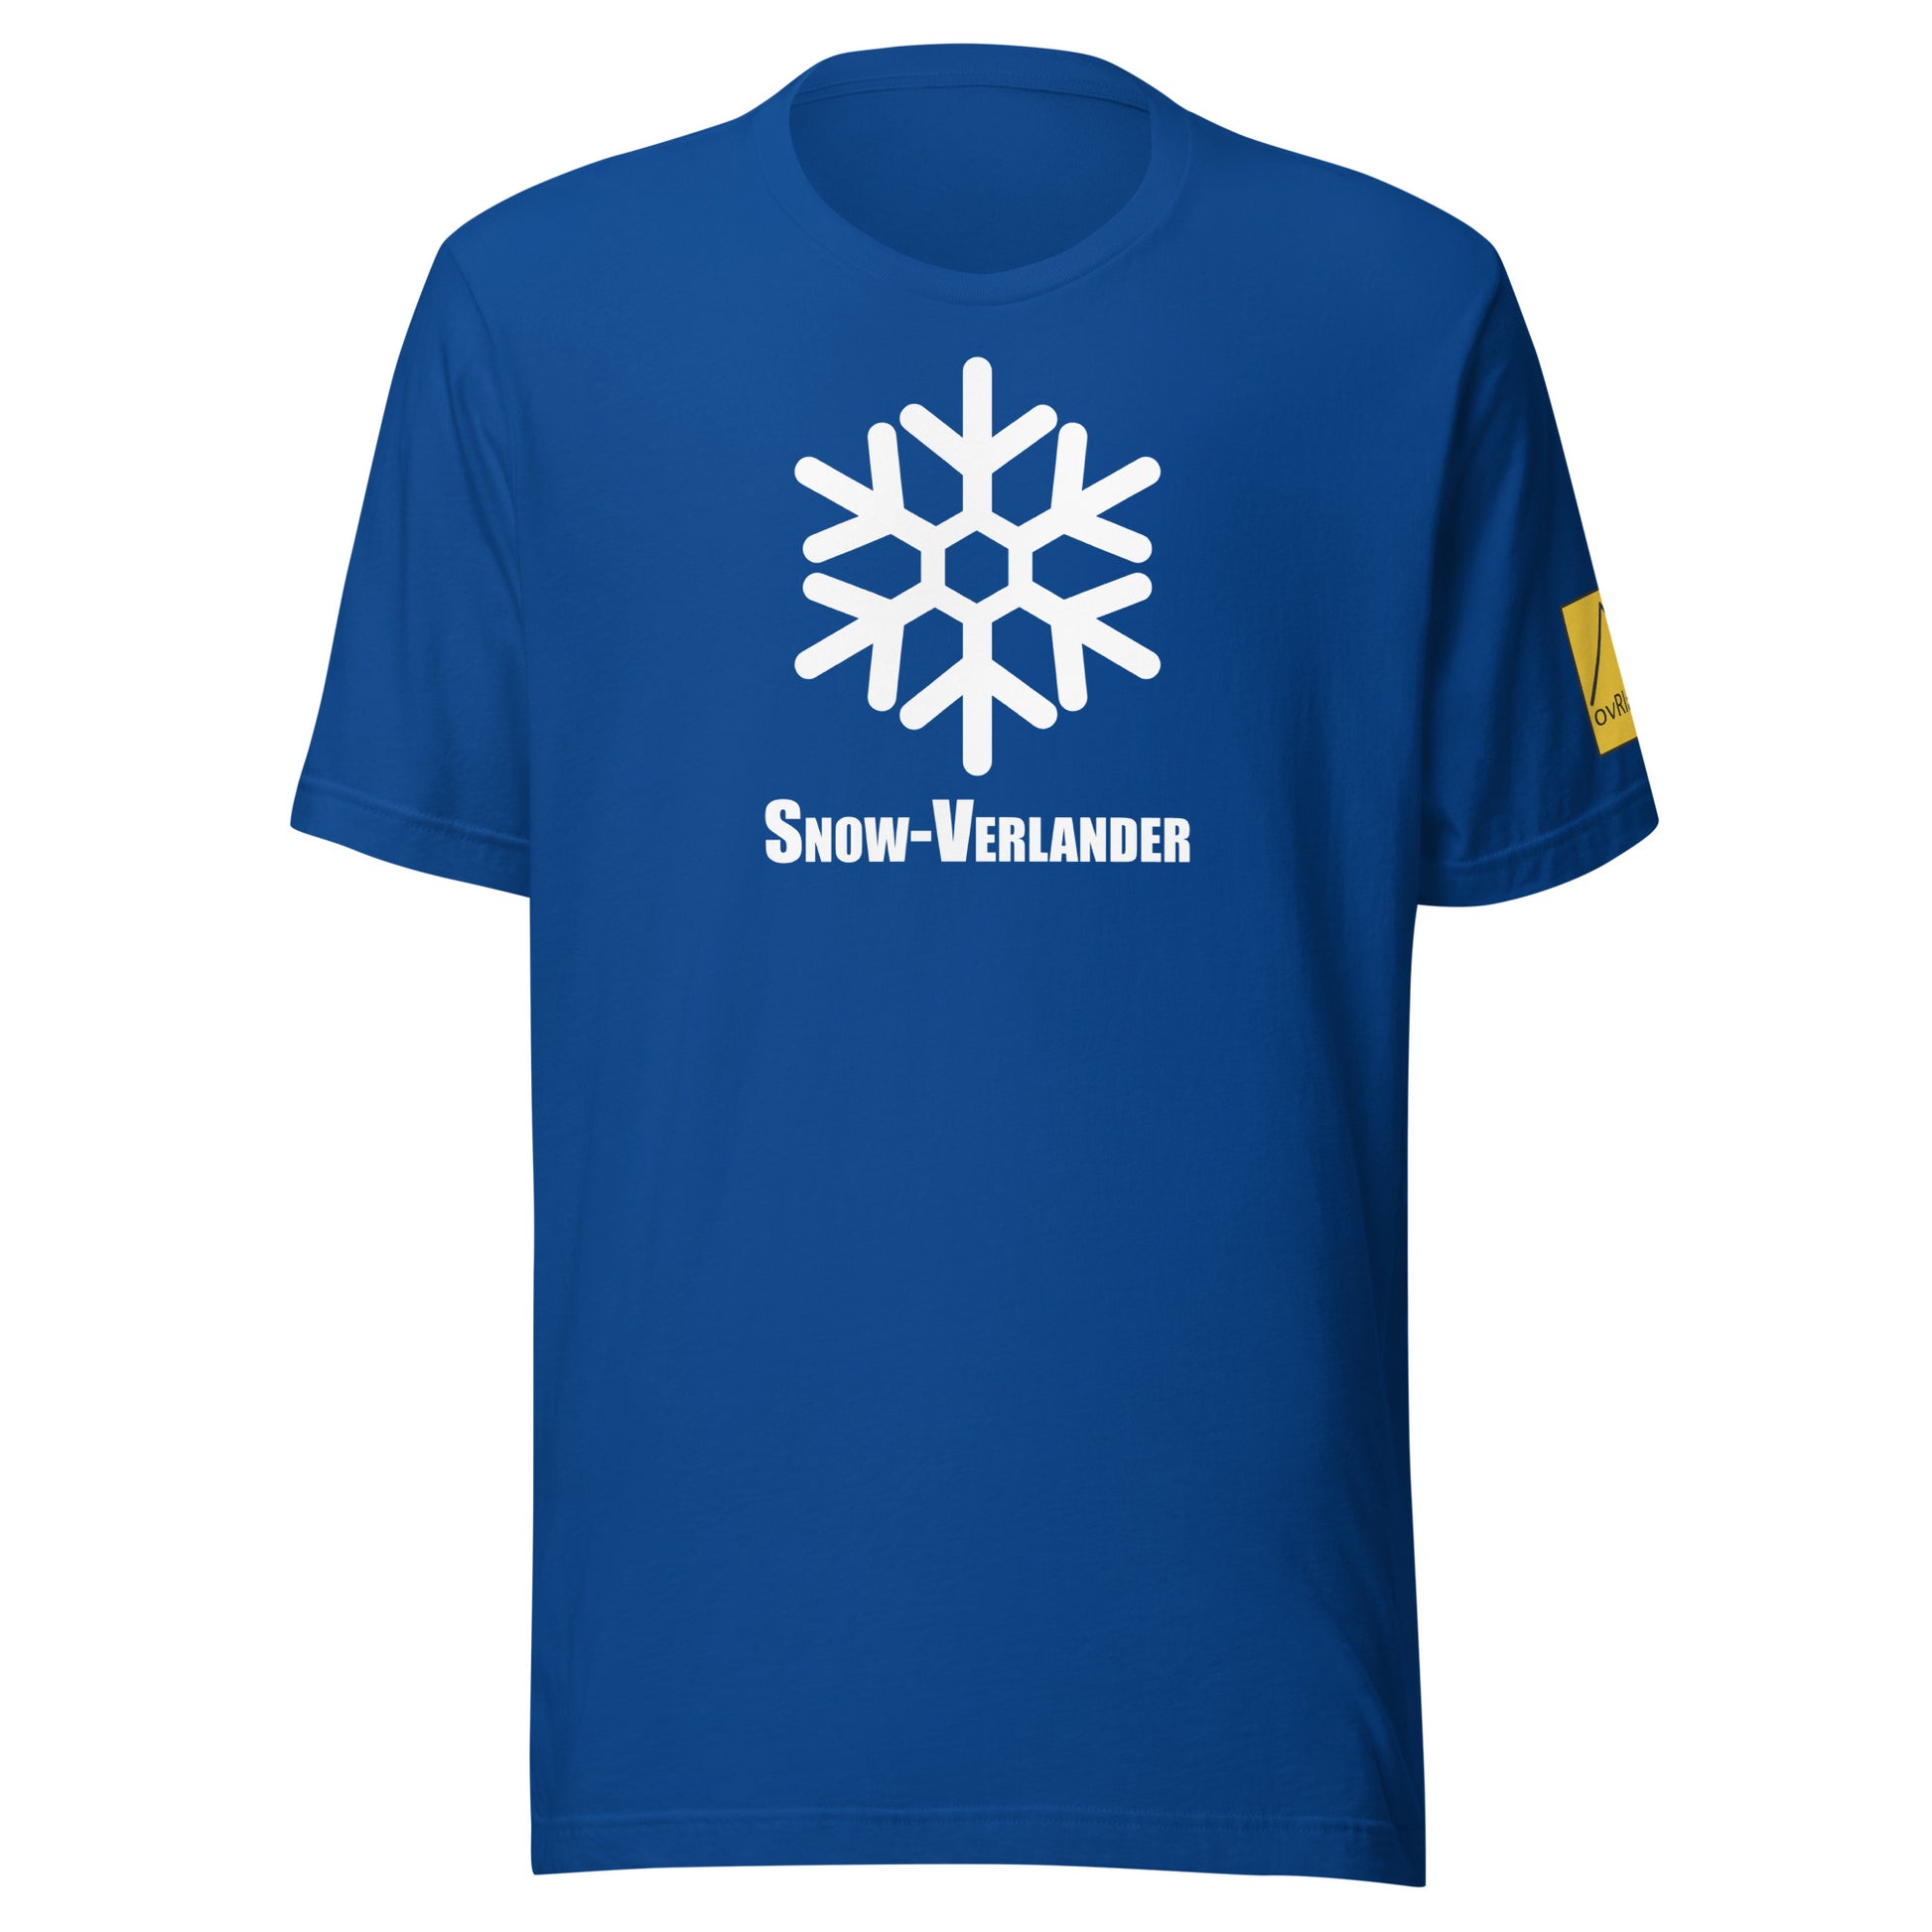 Snow-Verlander overland shirt. Blue. overland365.com